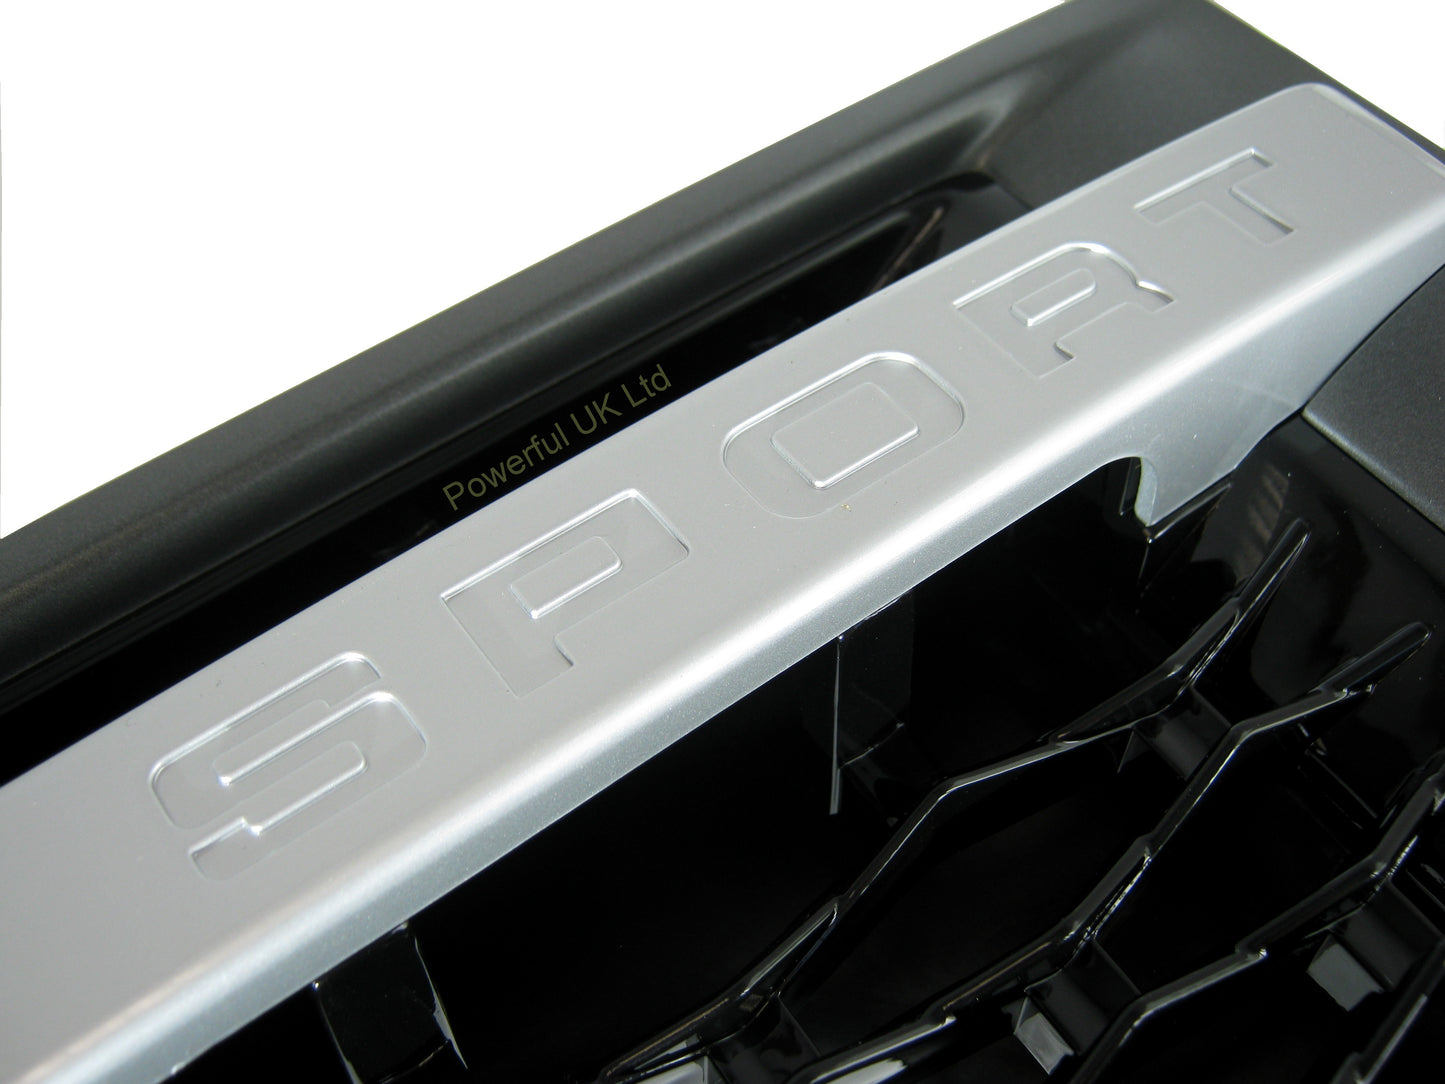 Side Vents - Grey/Silver/Black for Range Rover Sport 2010